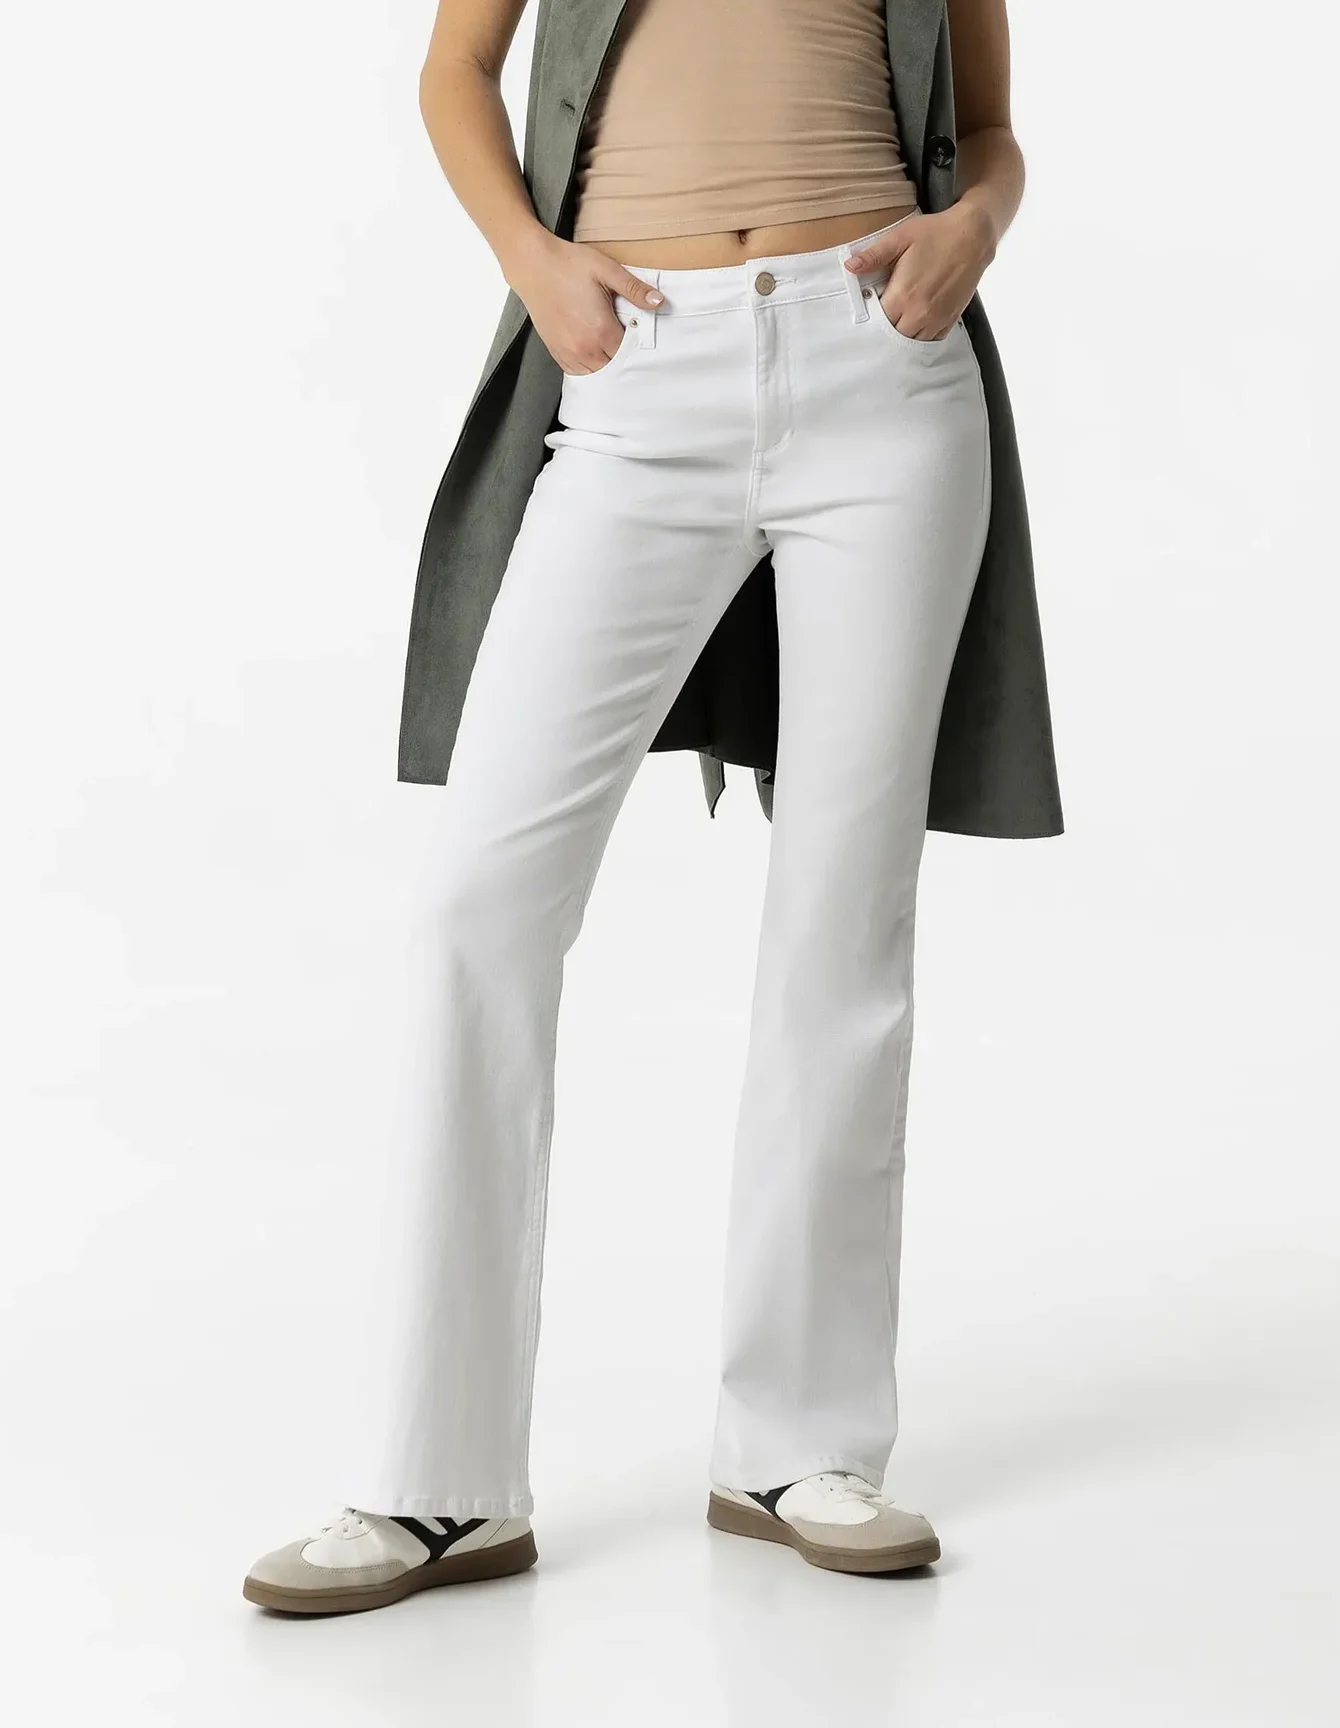 Woman Bootcut Jeans ZOE_44 White Denim. Γυναικείο λευκό τζιν παντελόνι από μαλακό και ελαστικό ύφασμα. Εφαρμόζει άψογα στους γοφούς και ανοίγει σε σχήμα καμπάνας στο τελείωμα. Ψηλό καβάλο που κολακεύει το γυναικείο σώμα. Συνδύασε το εύκολα μέρα και νύχτα. Materials 98% cotton 2% elastan.